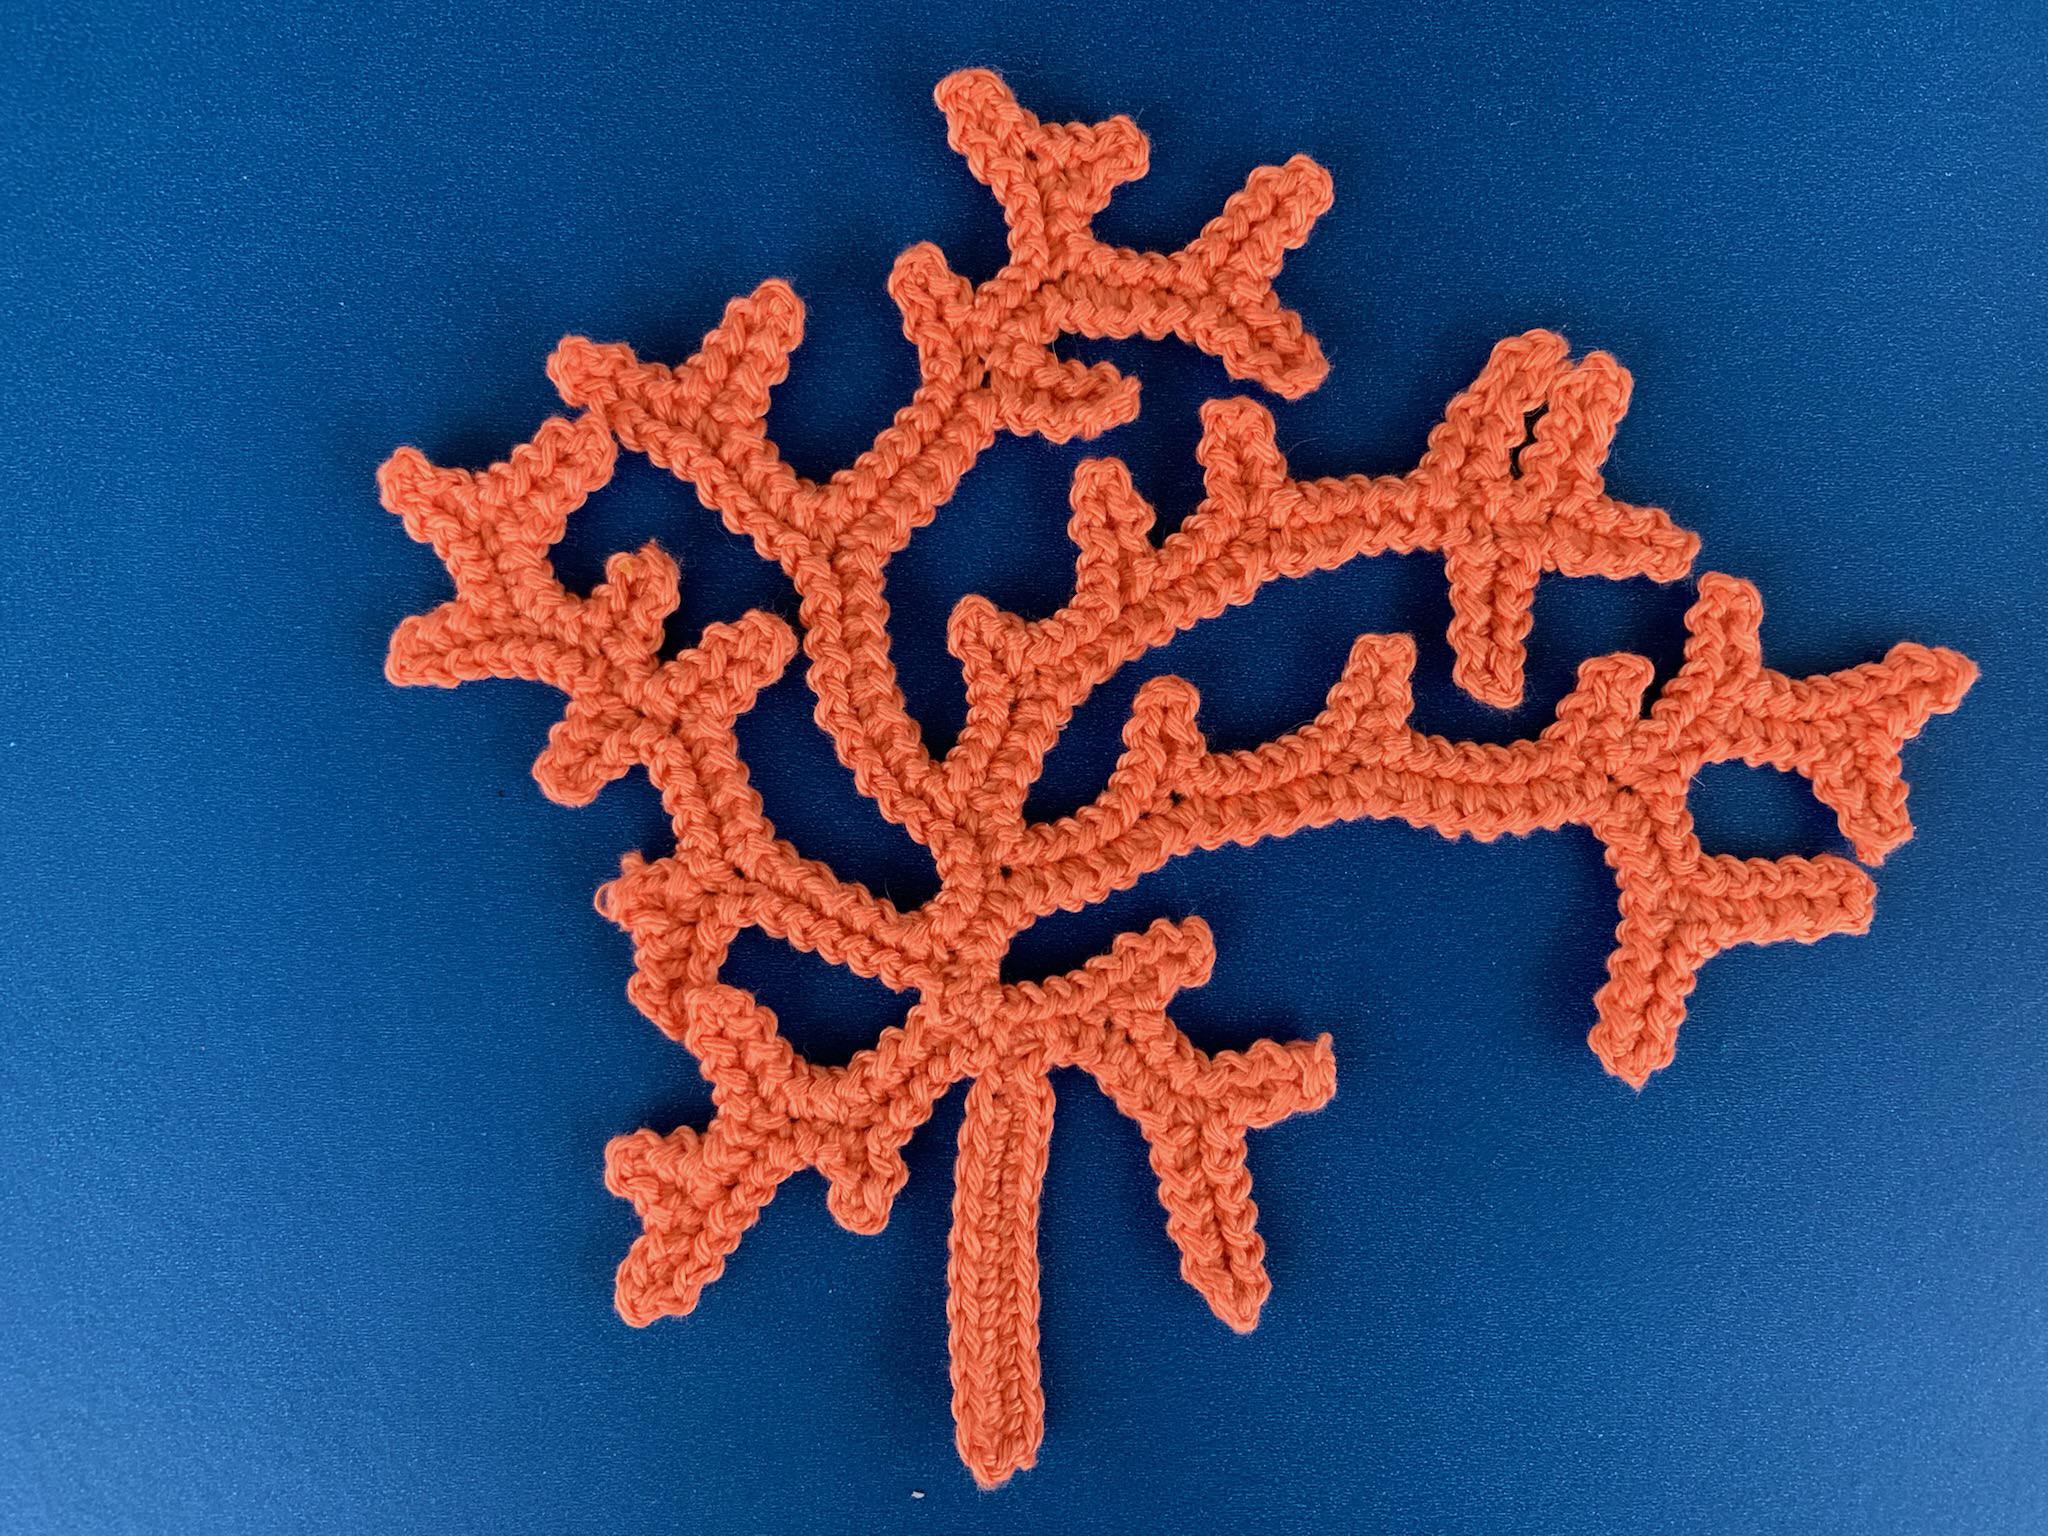 Finished crochet coral 4 ply landscape